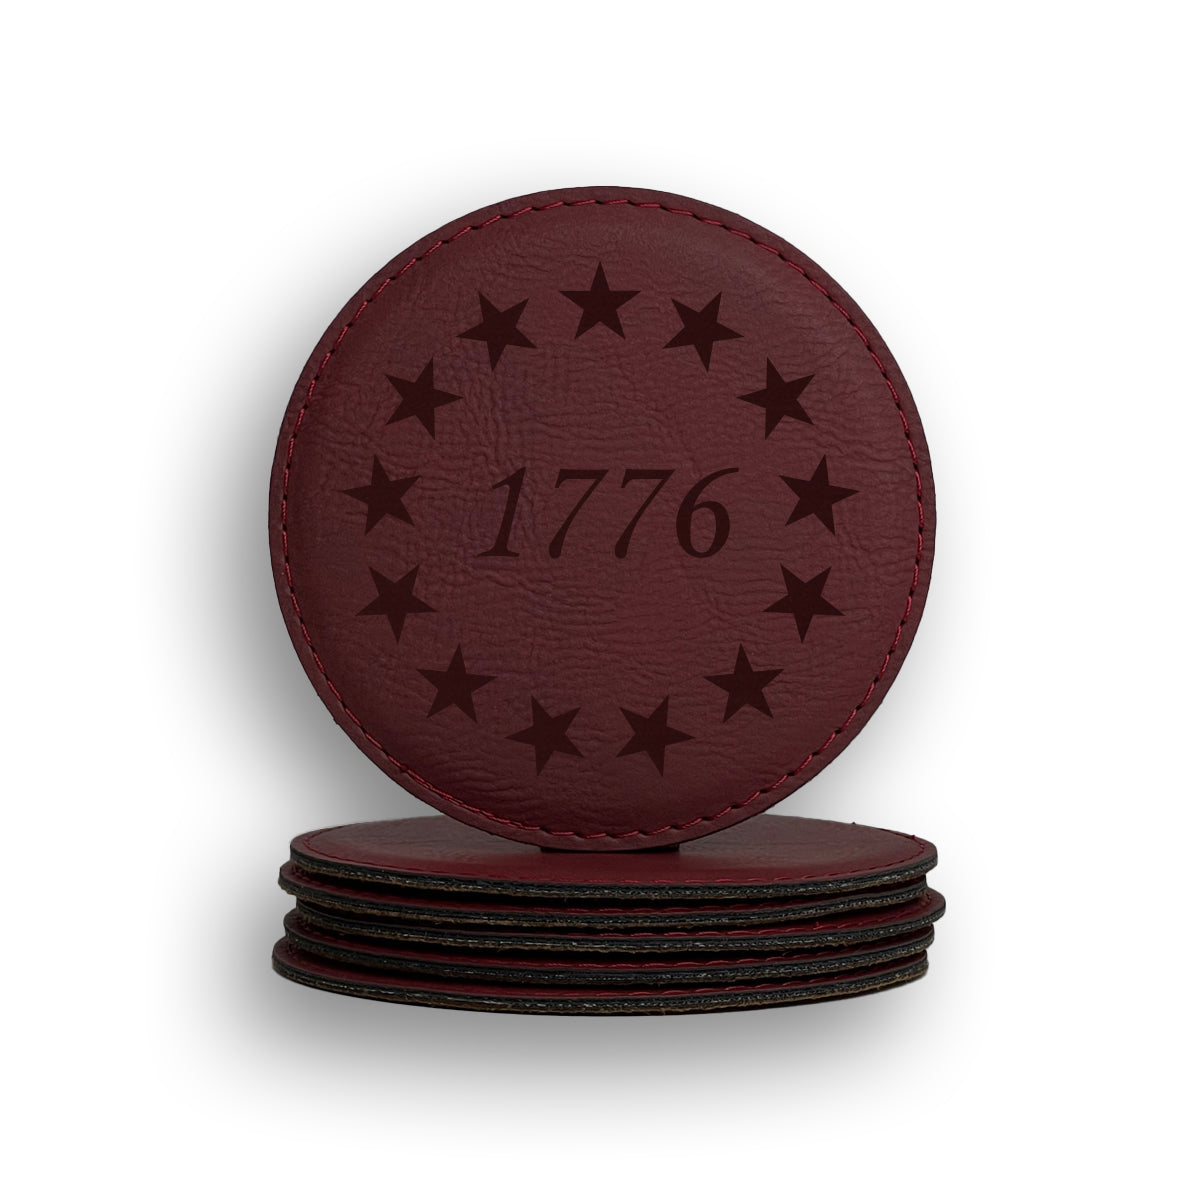 1776 Coaster